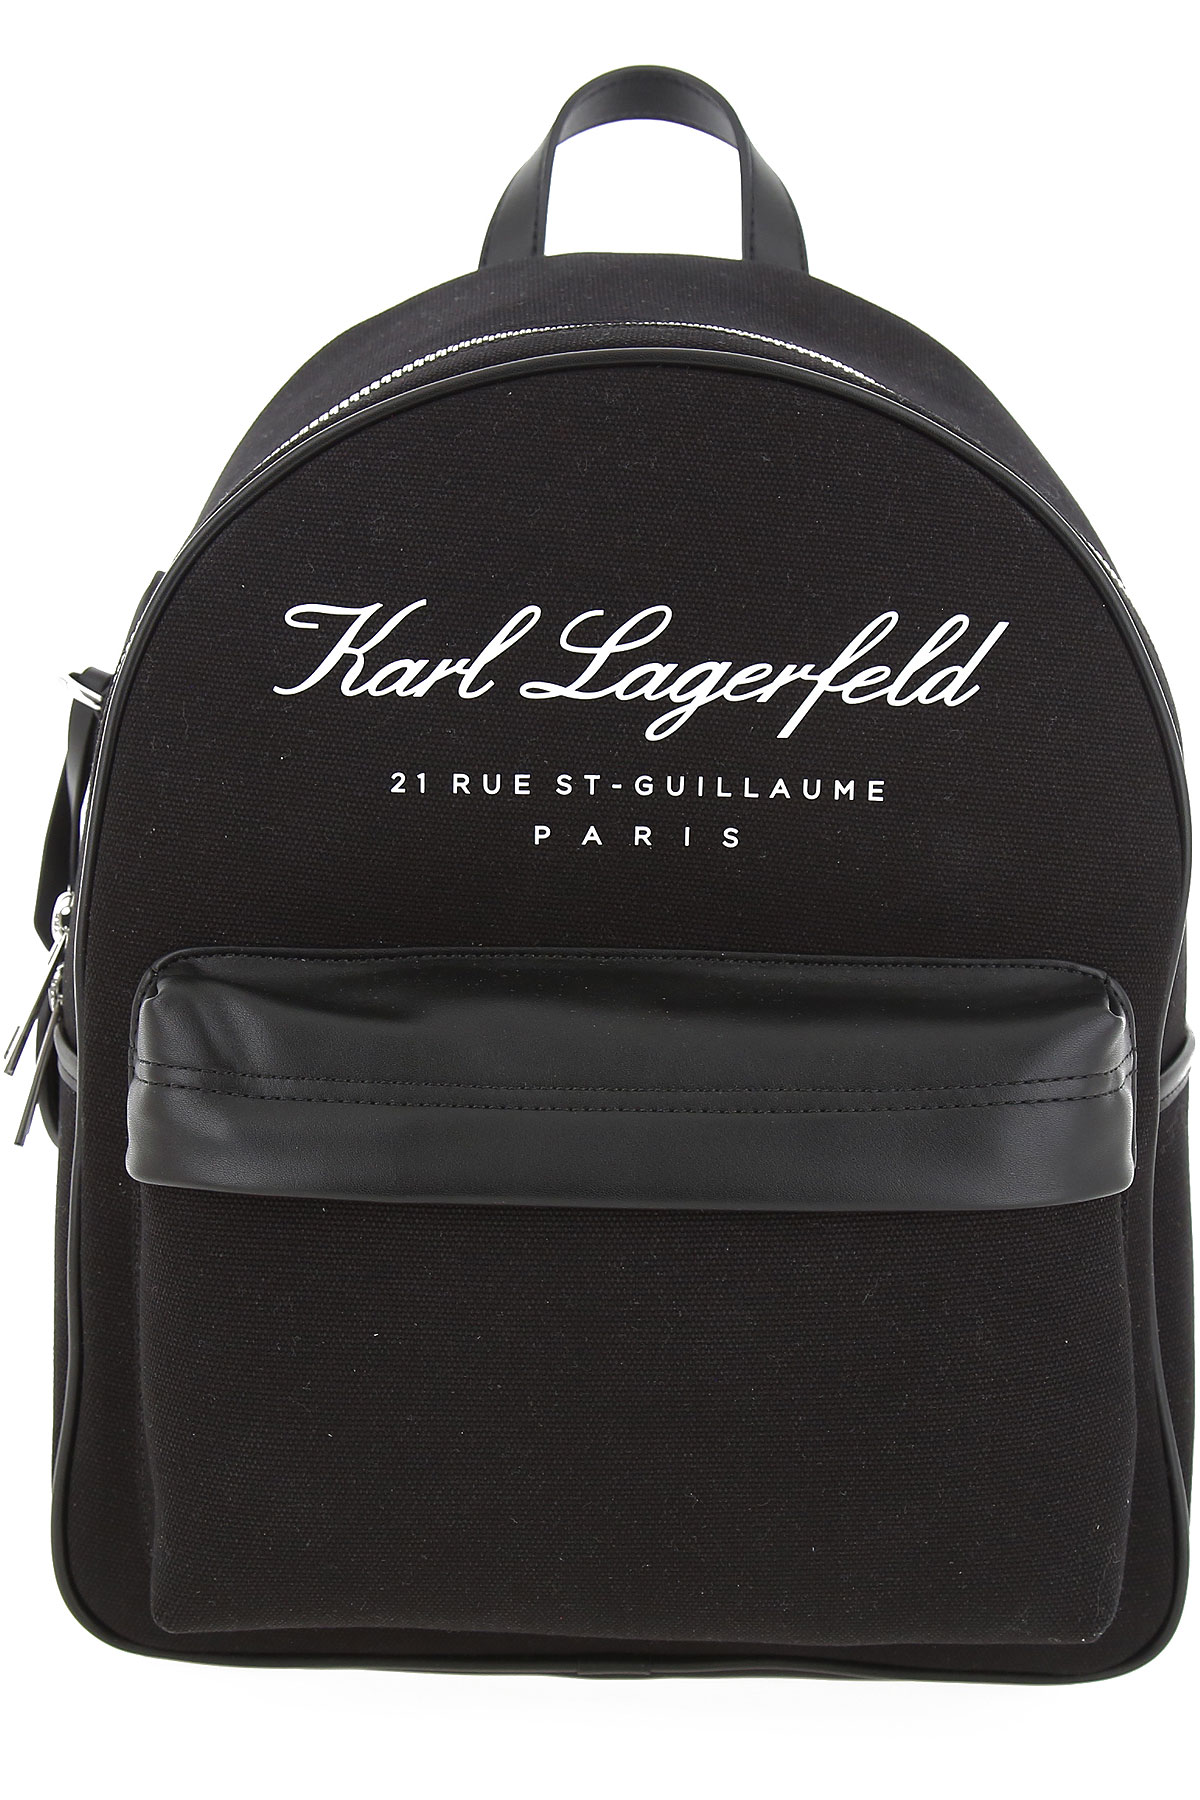 KENDALL + KYLIE Sloane Mini Backpack in Black | REVOLVE